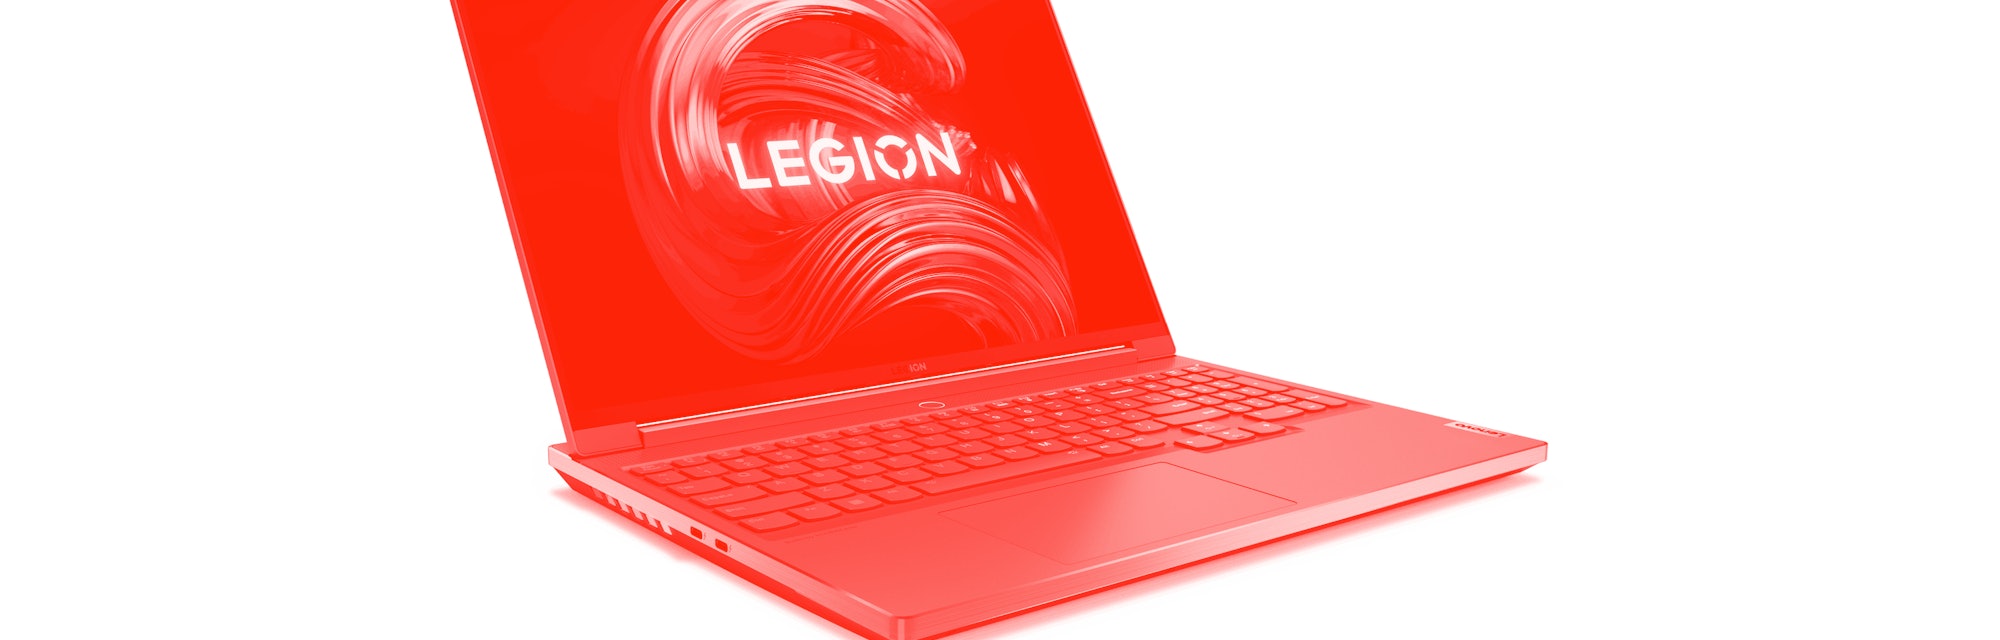 Lenovo Legion 7i gaming laptop 2022 RGB lighting in vents